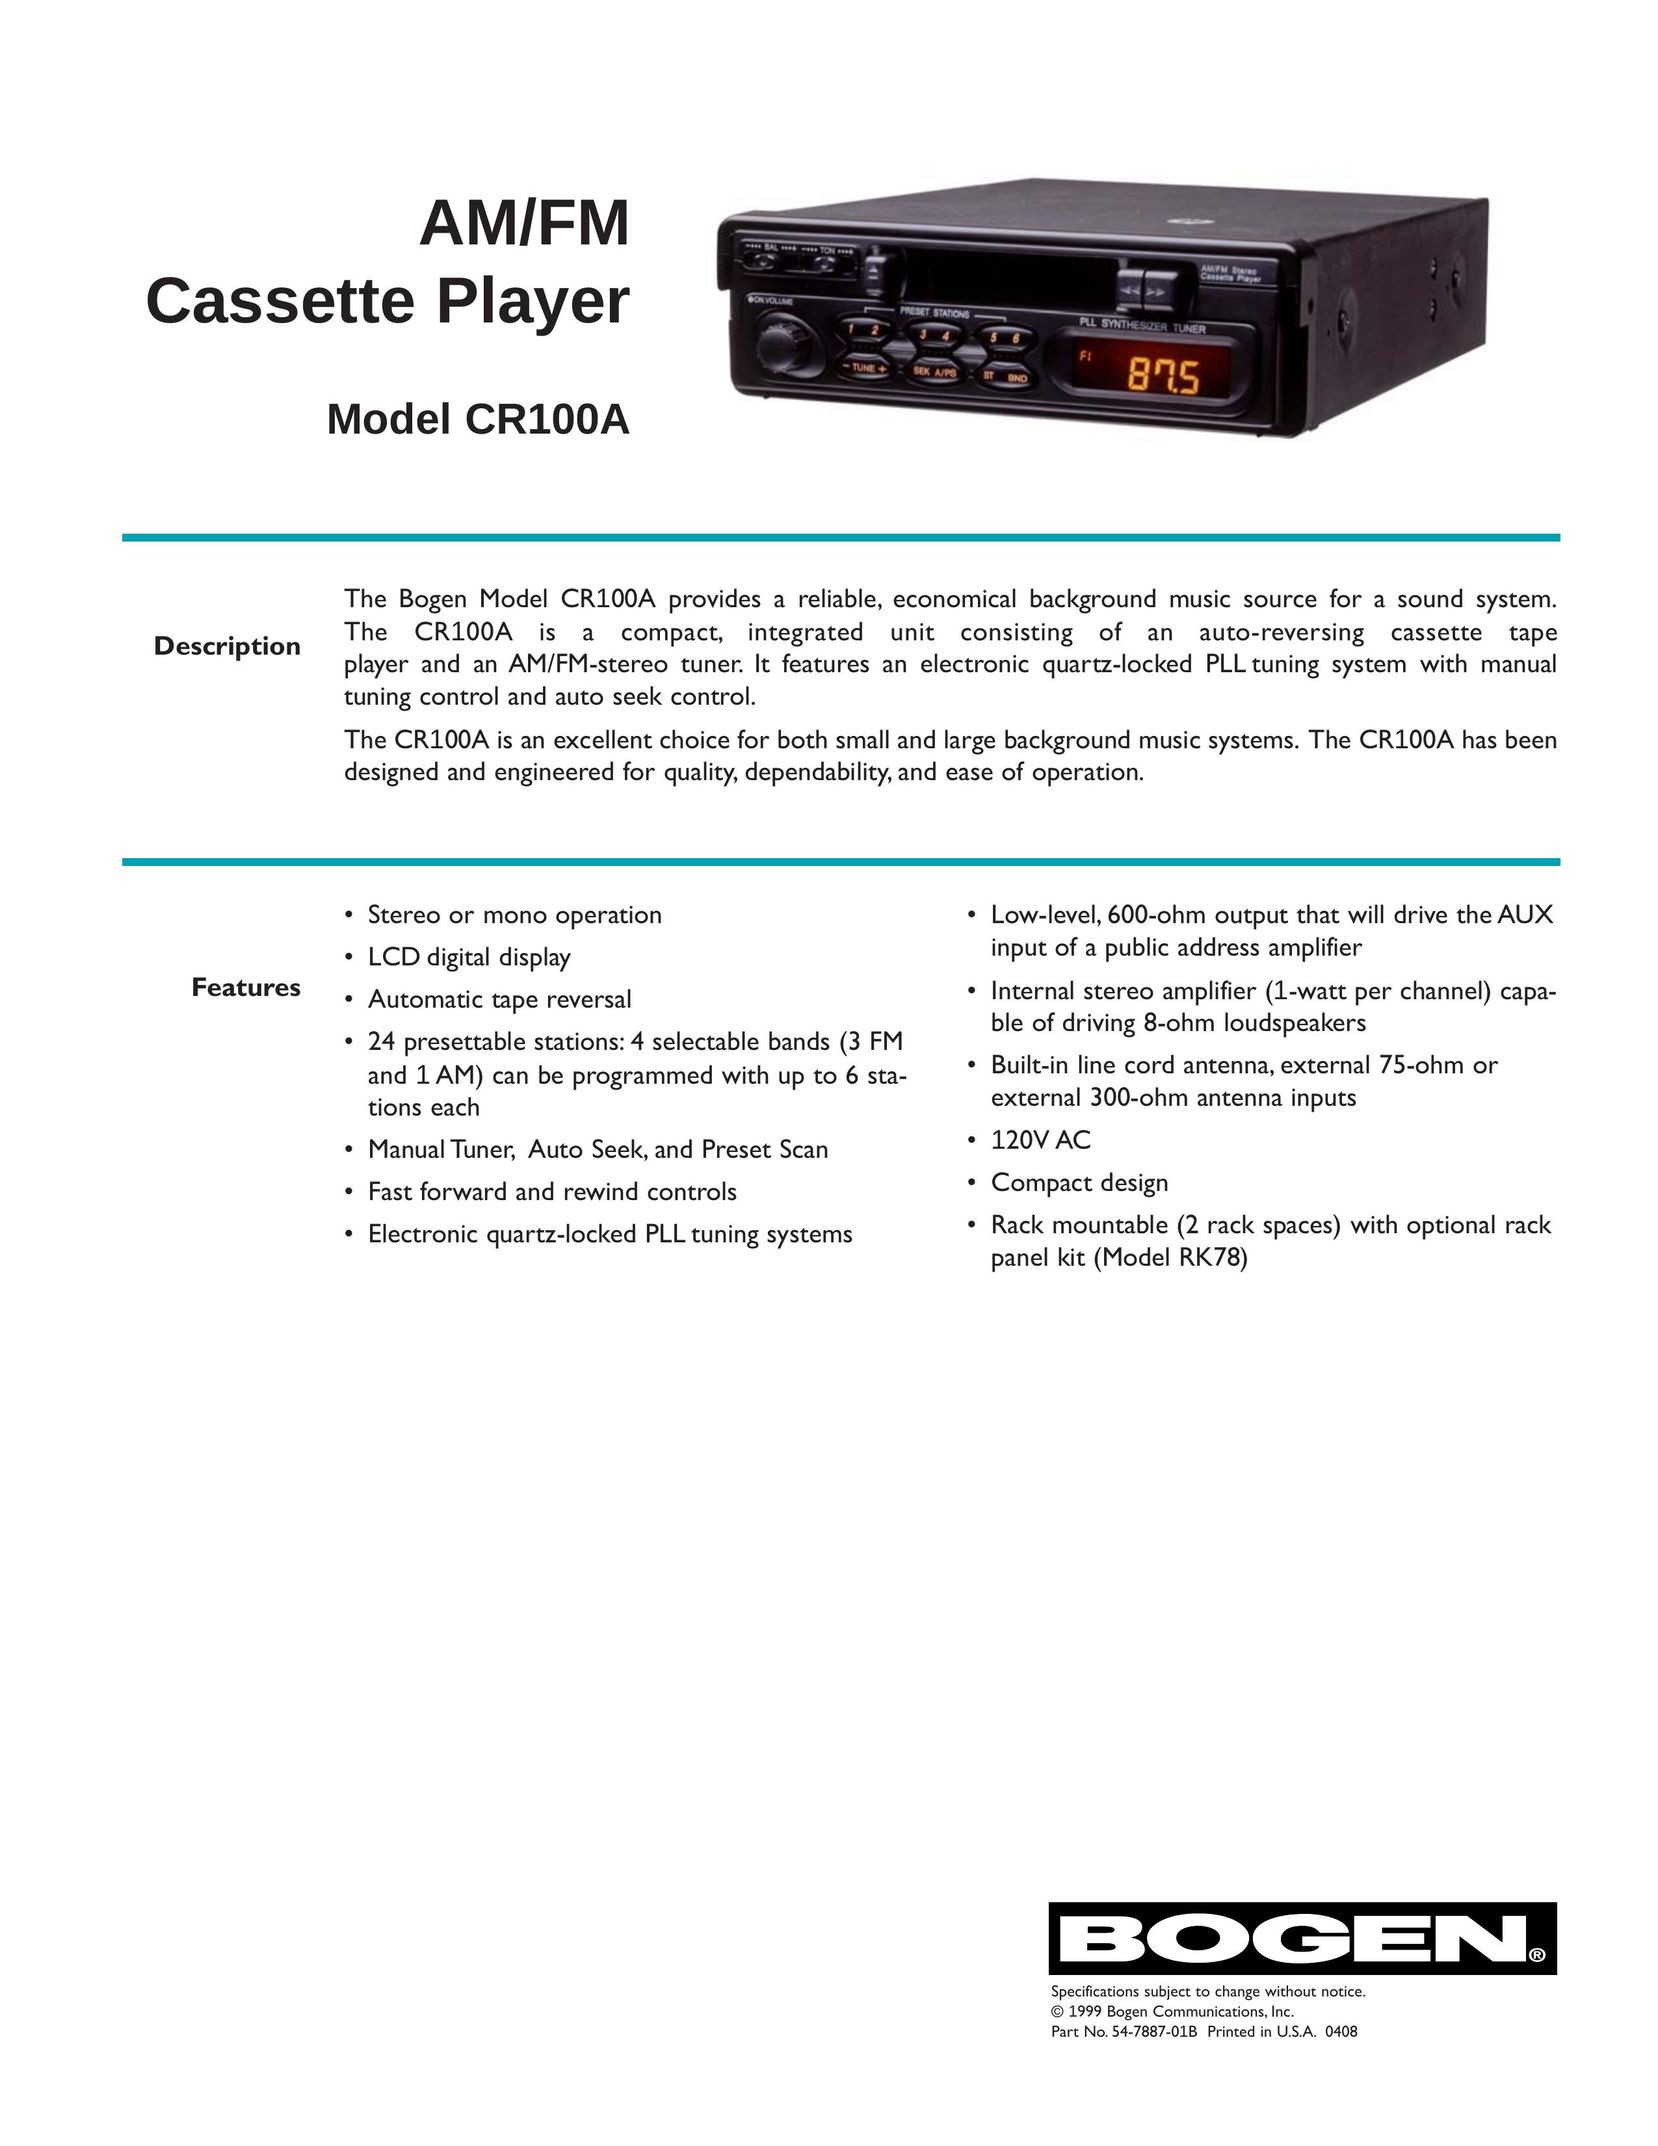 Bogen CR100A Cassette Player User Manual (Page 1)